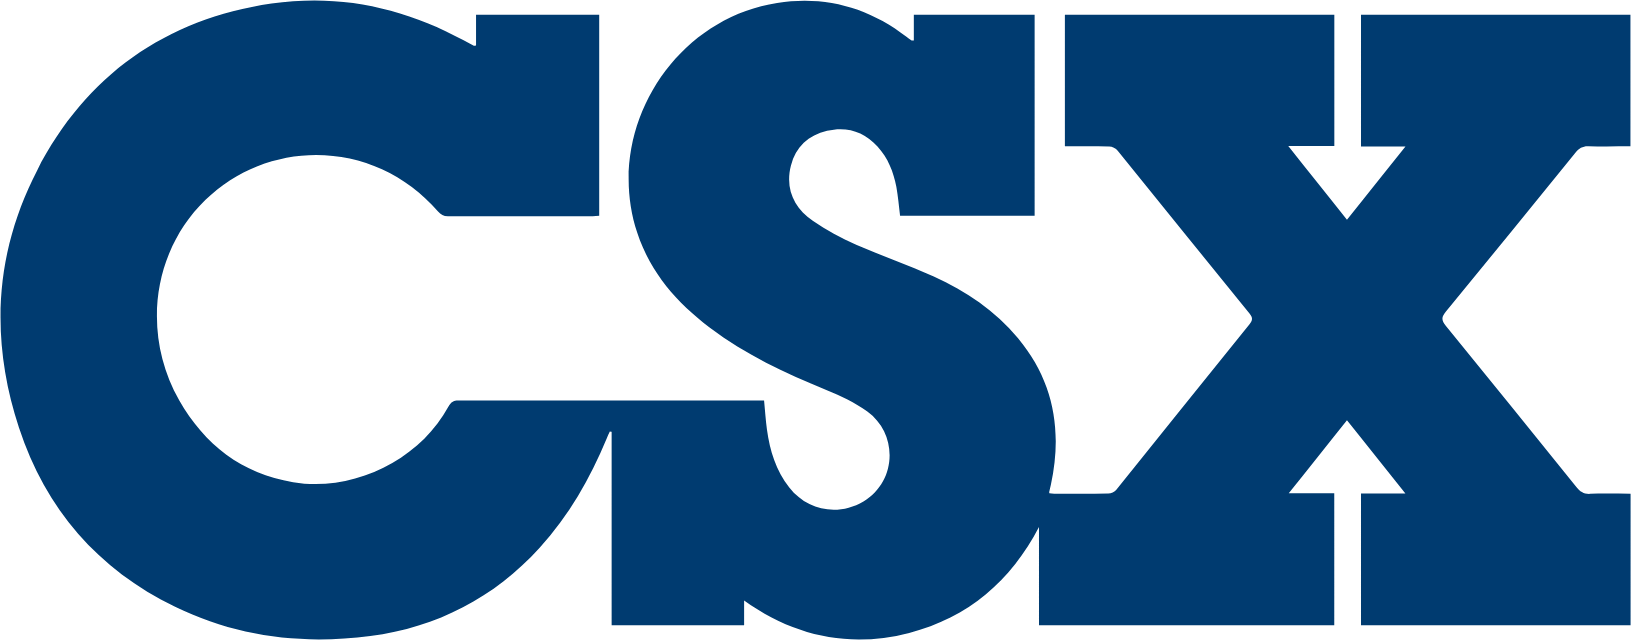 CSX Corporation logo (transparent PNG)